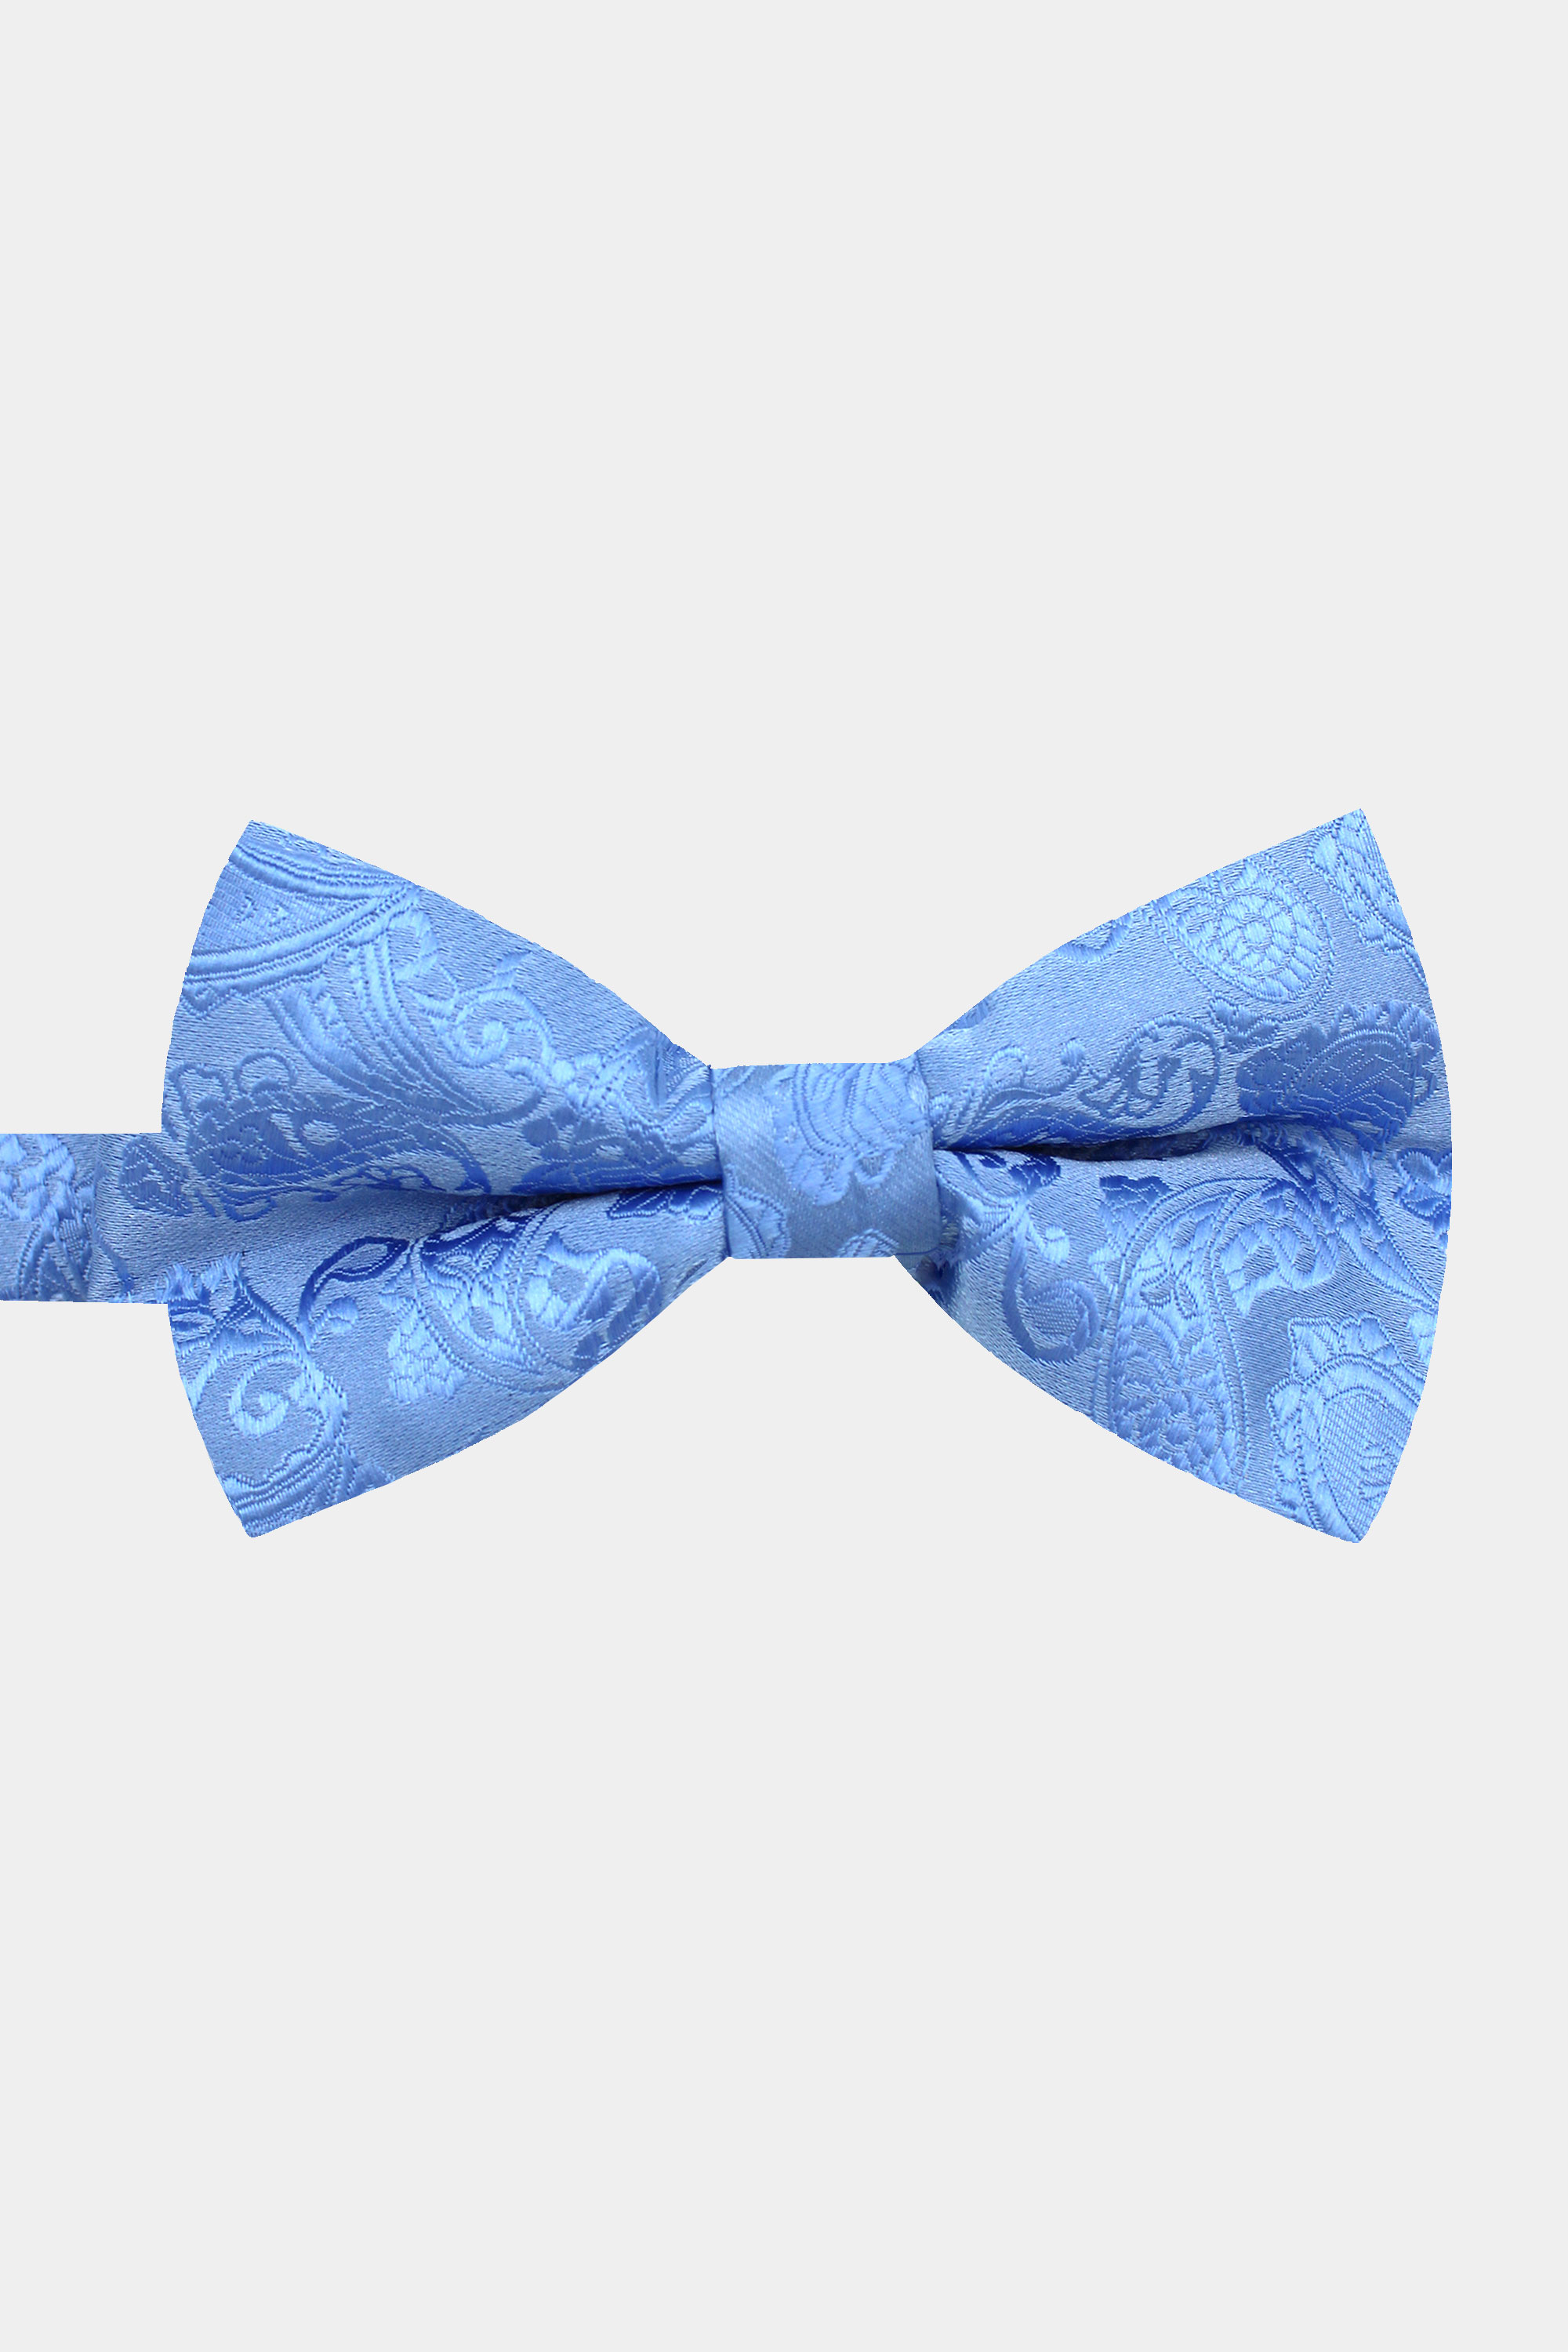 Light-Blue-Paisley-Bow-Tie-from-Gentlemansguru.Com